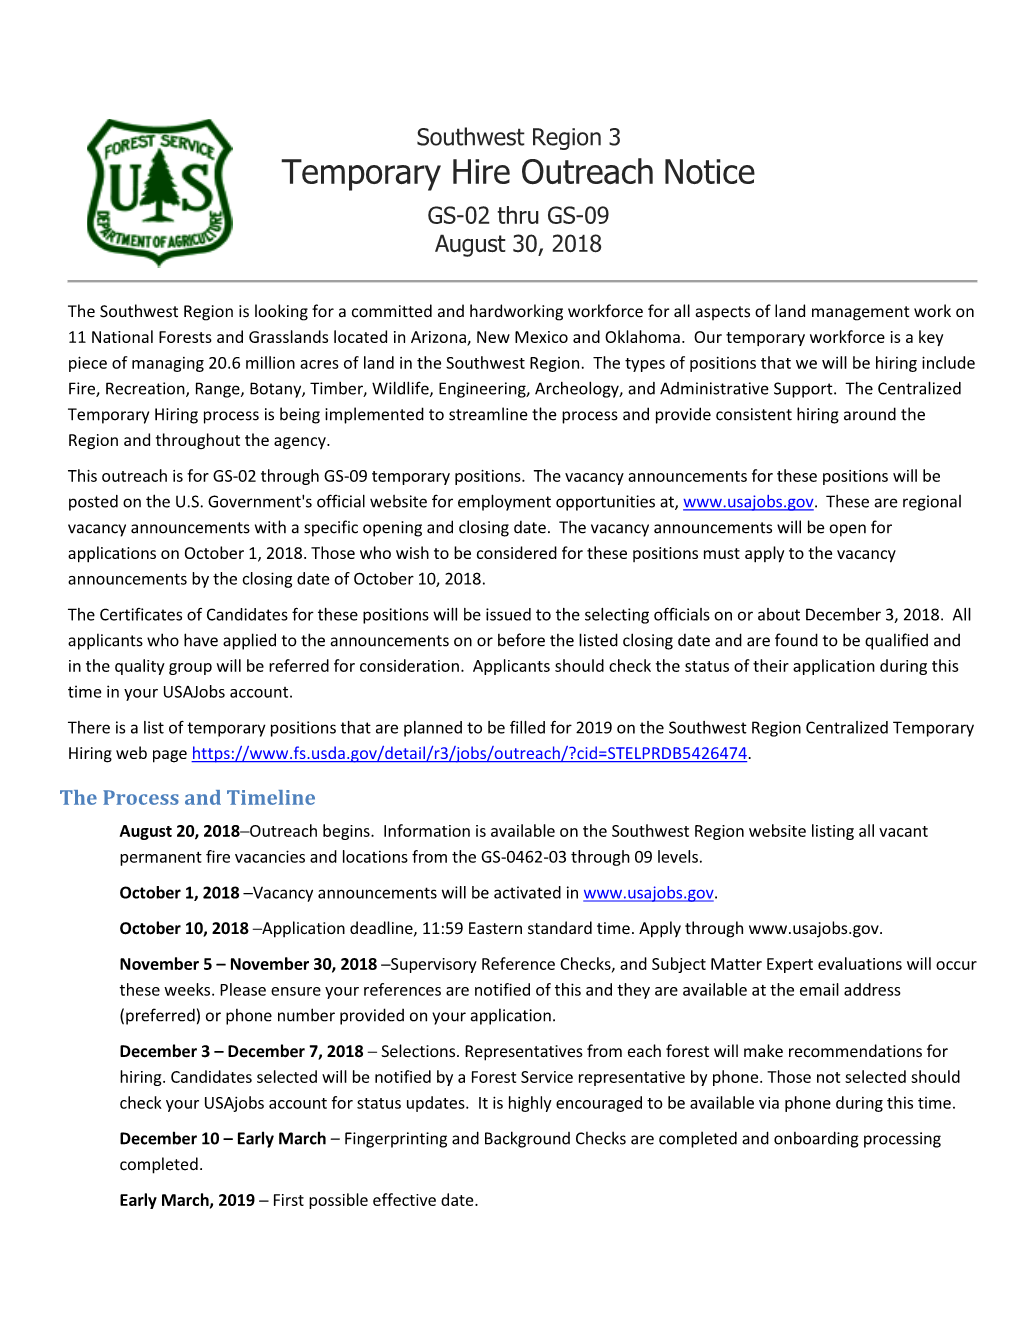 Temporary Hire Outreach Notice GS-02 Thru GS-09 August 30, 2018